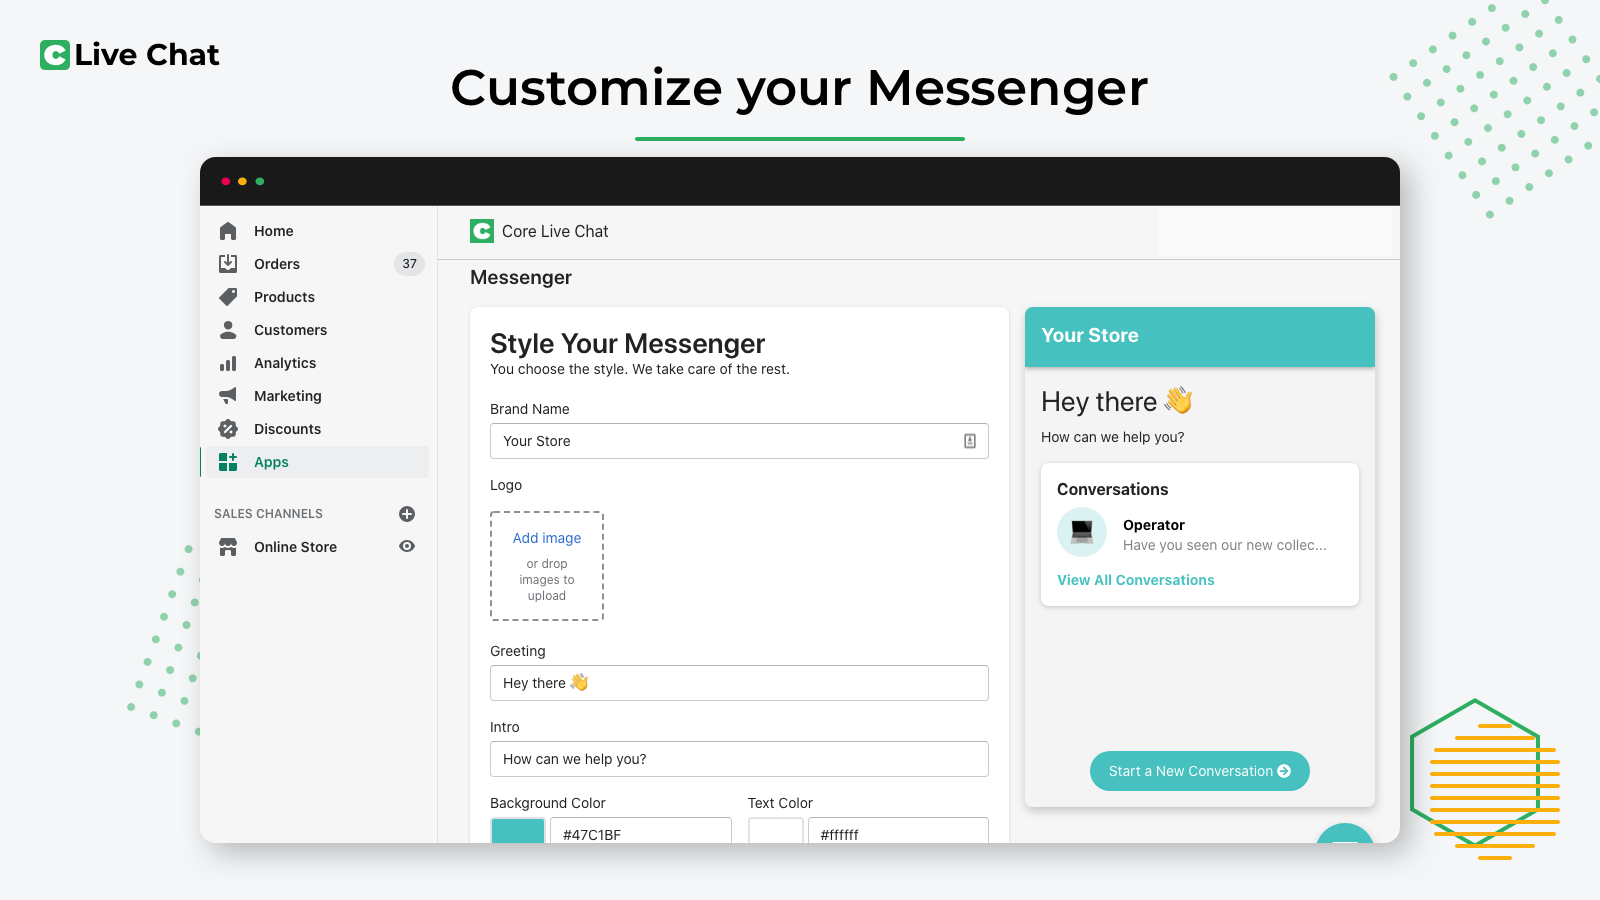 Customize your Messenger